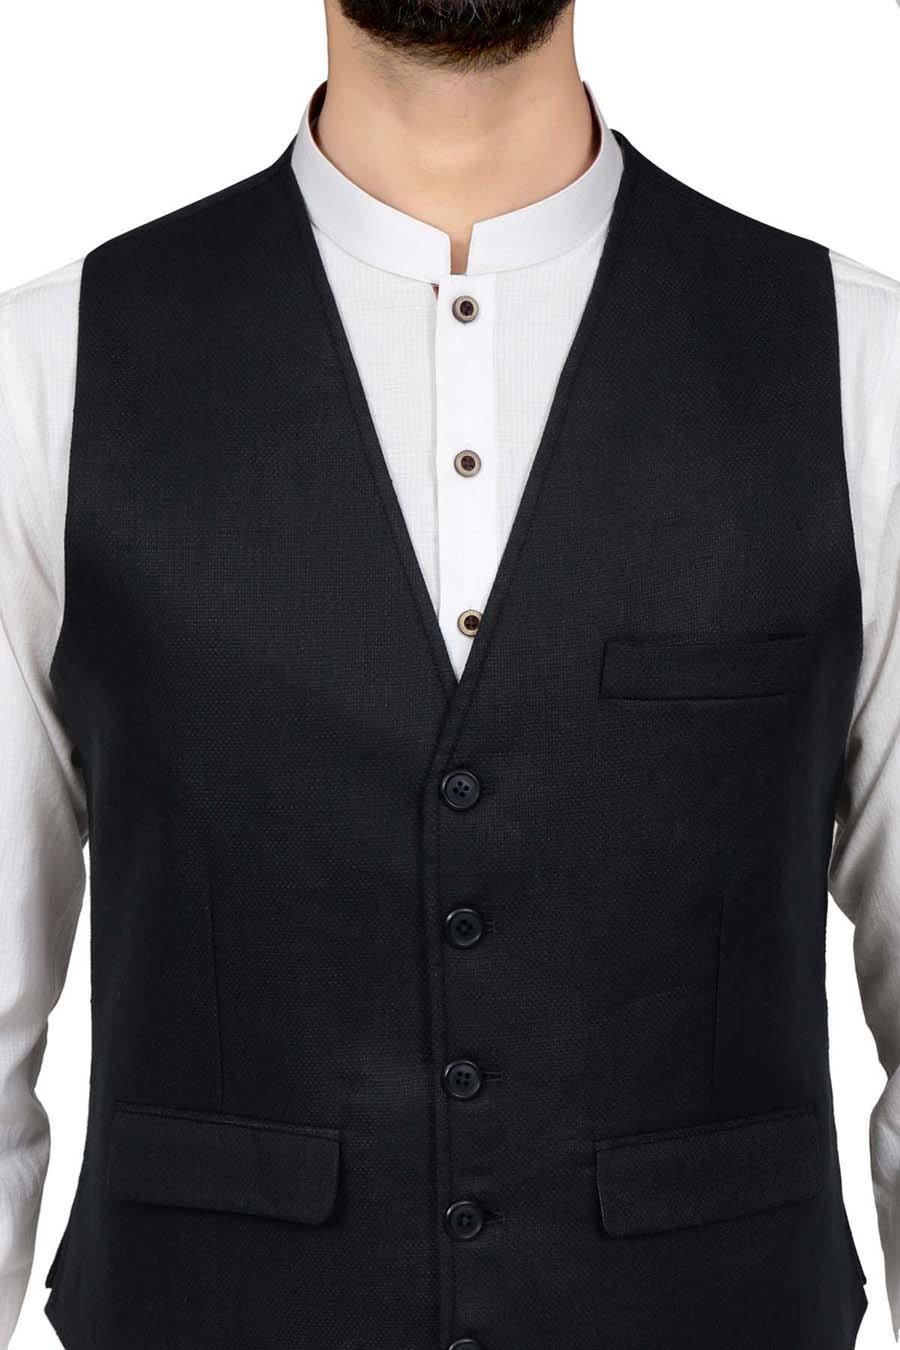 Waistcoat V Neck Charcoal at Charcoal Clothing